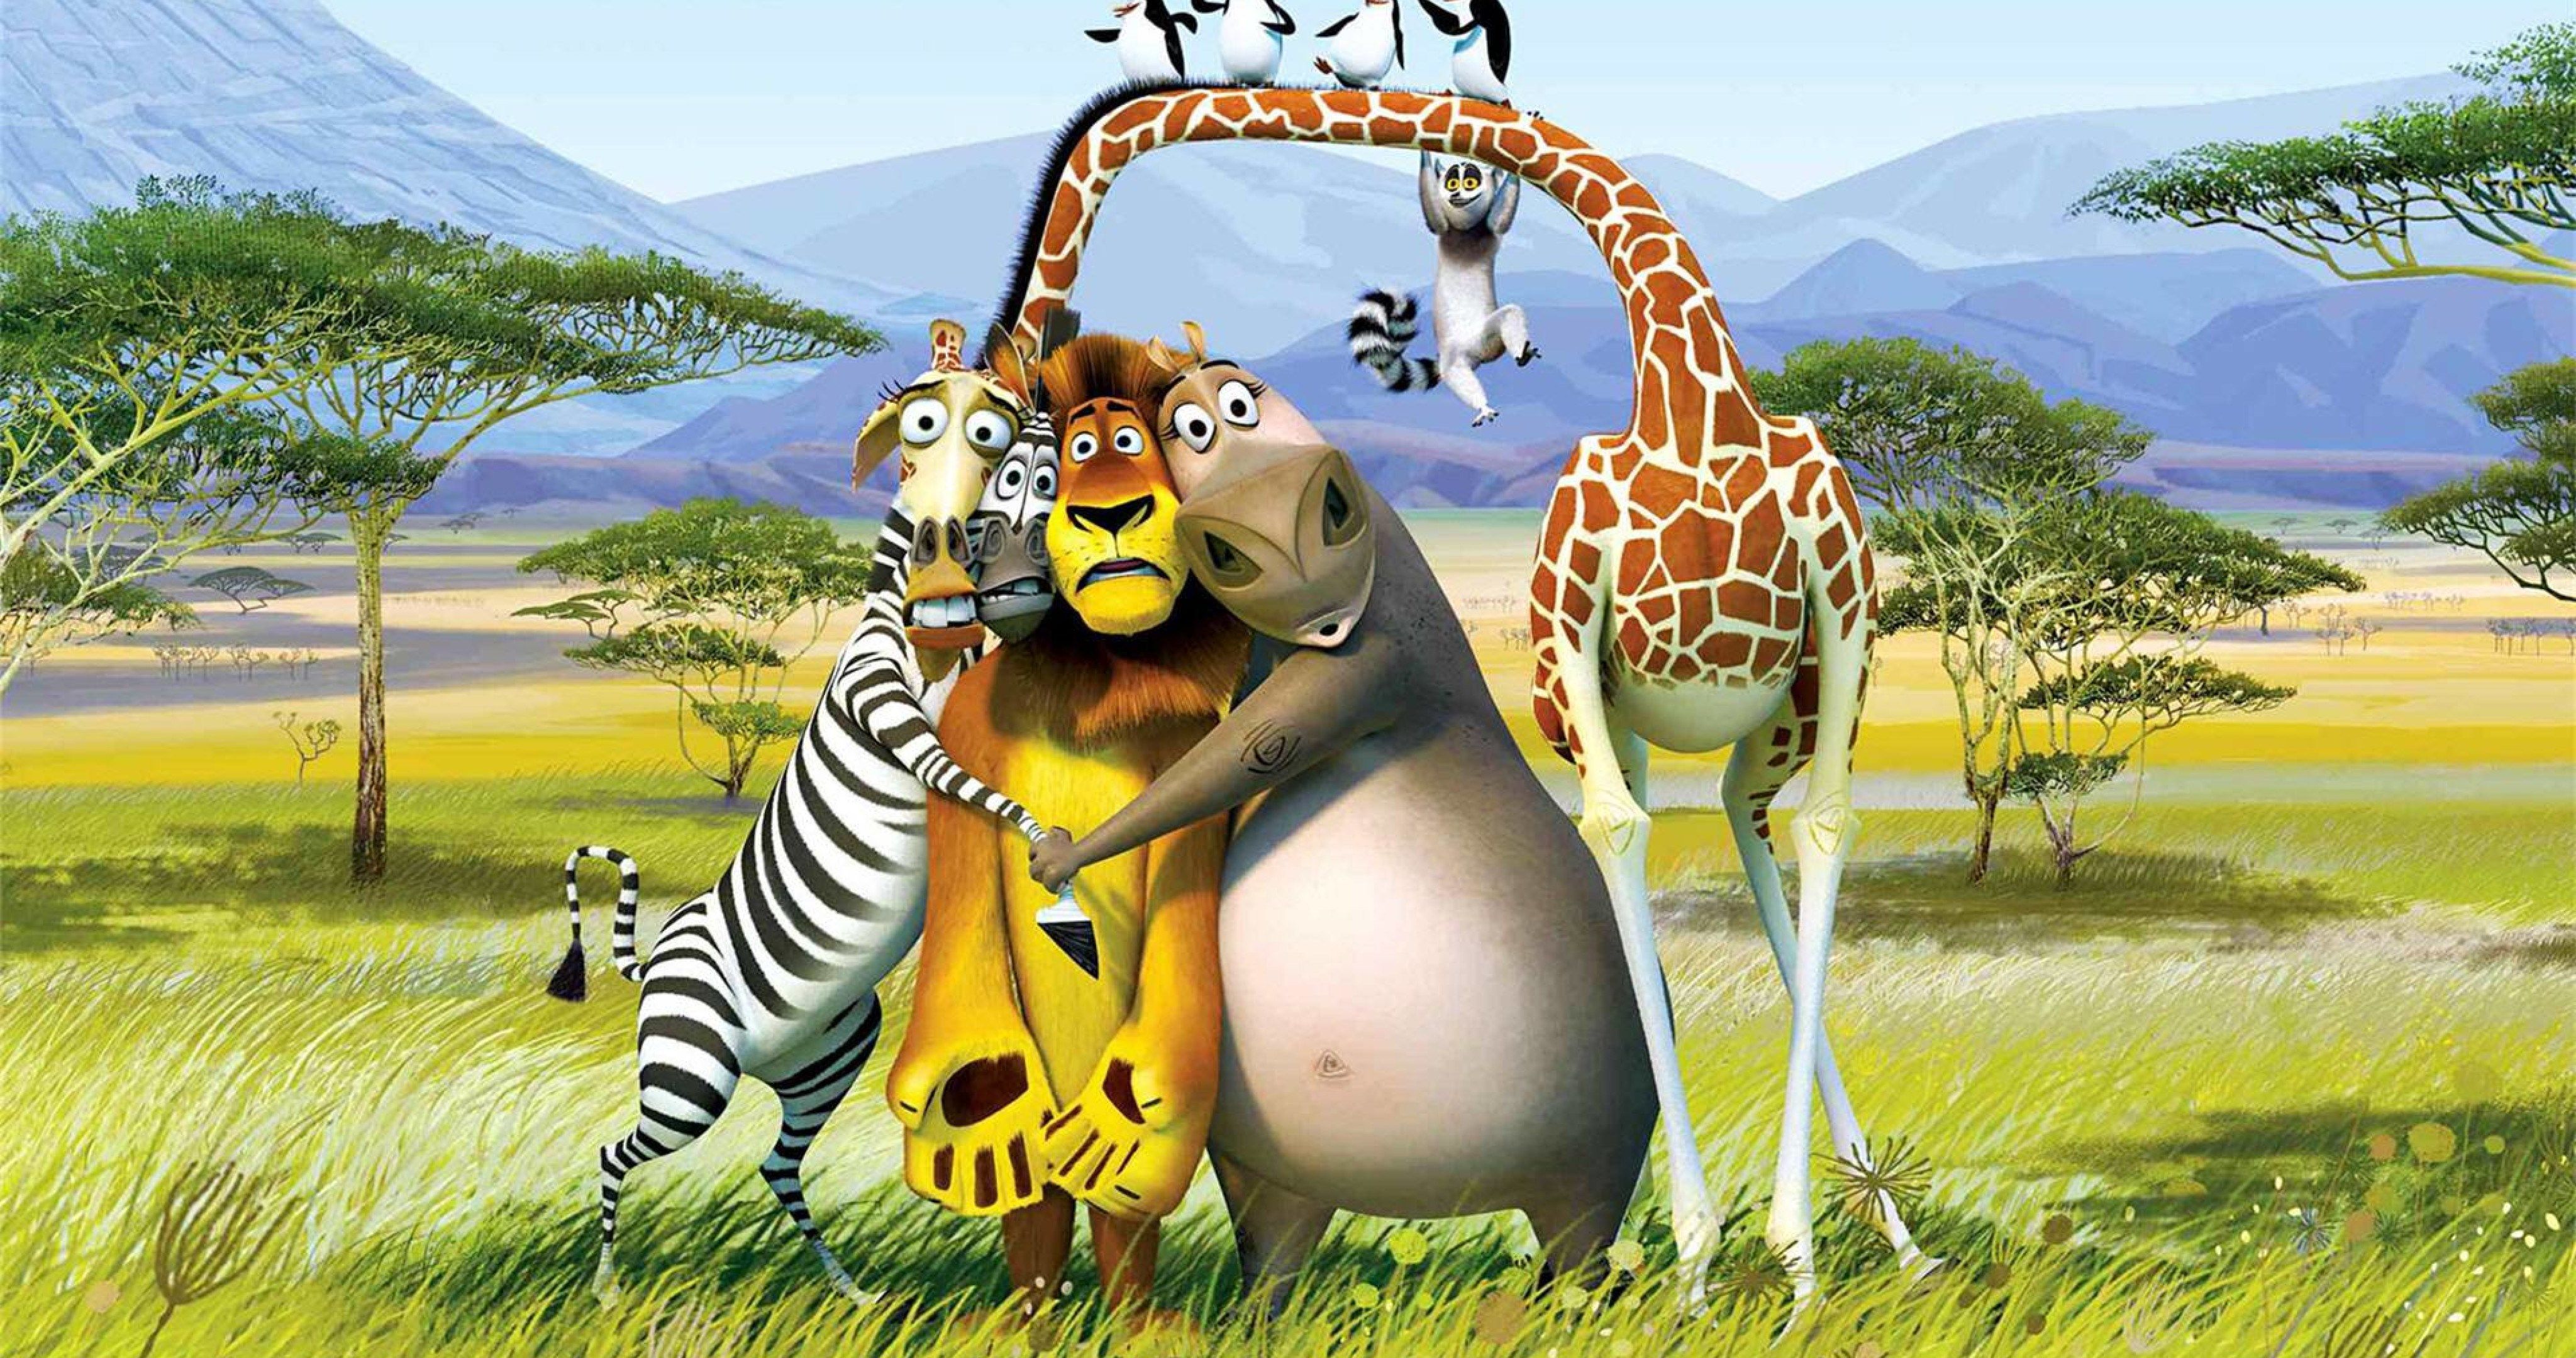 funny madagascar 4k ultra HD wallpaper. Madagascar movie, Cartoon pics, Cartoon wallpaper